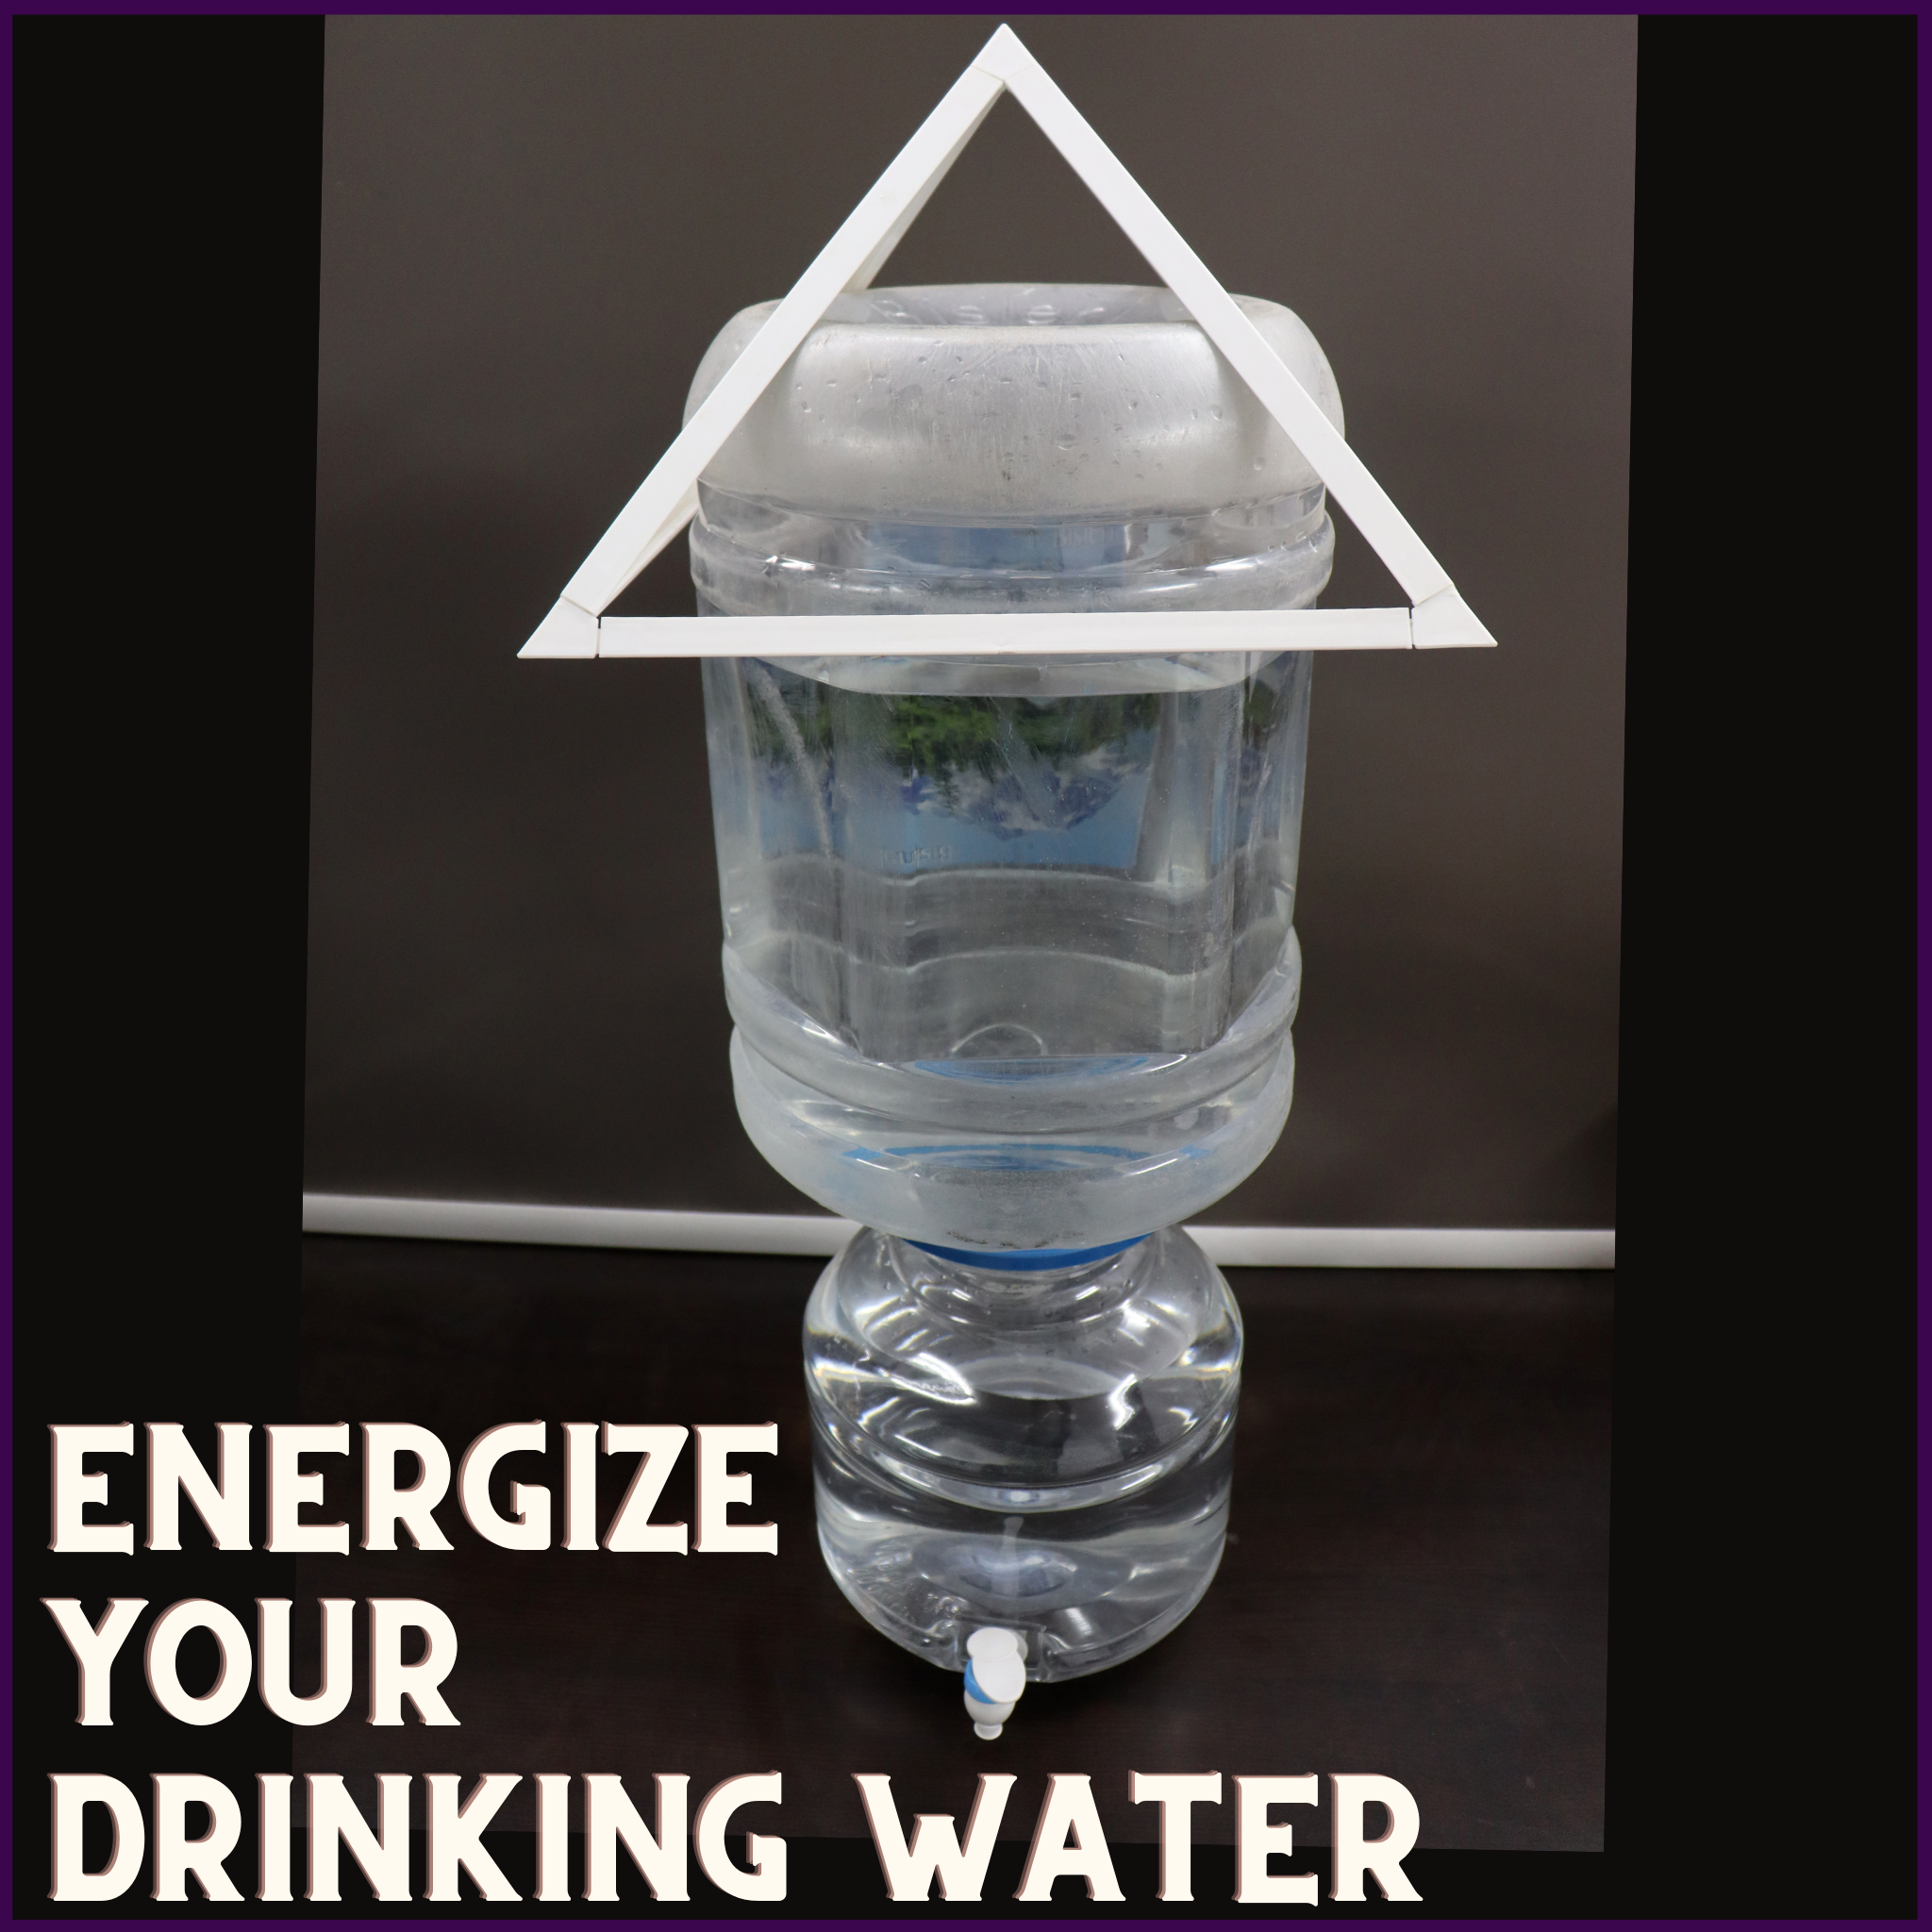 1FT(Base) Open Frame Pyramid For Meditation & For Energising Food & Beverages - 51pyramids